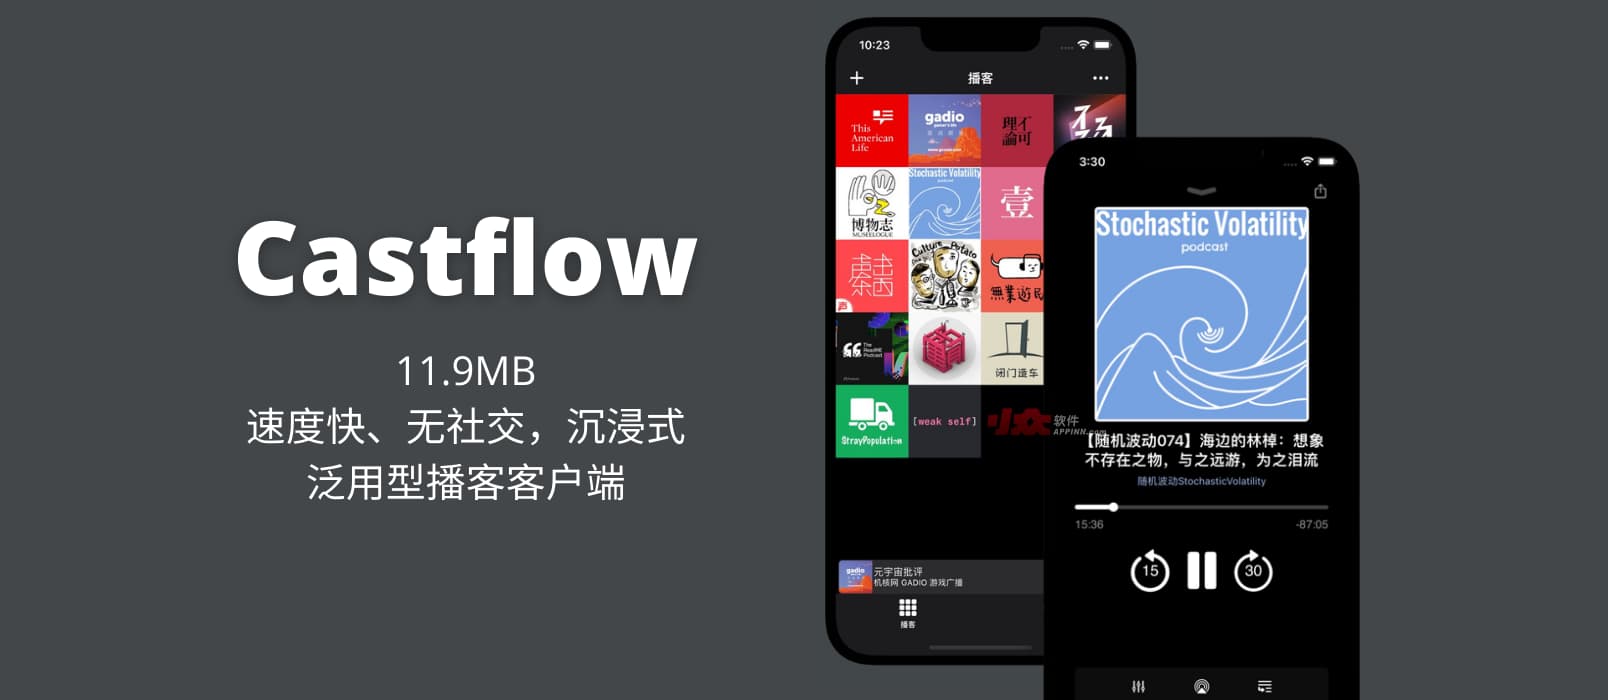 Castflow - 只有 11.9MB，速度快、无社交，沉浸式泛用型播客客户端[iPhone]